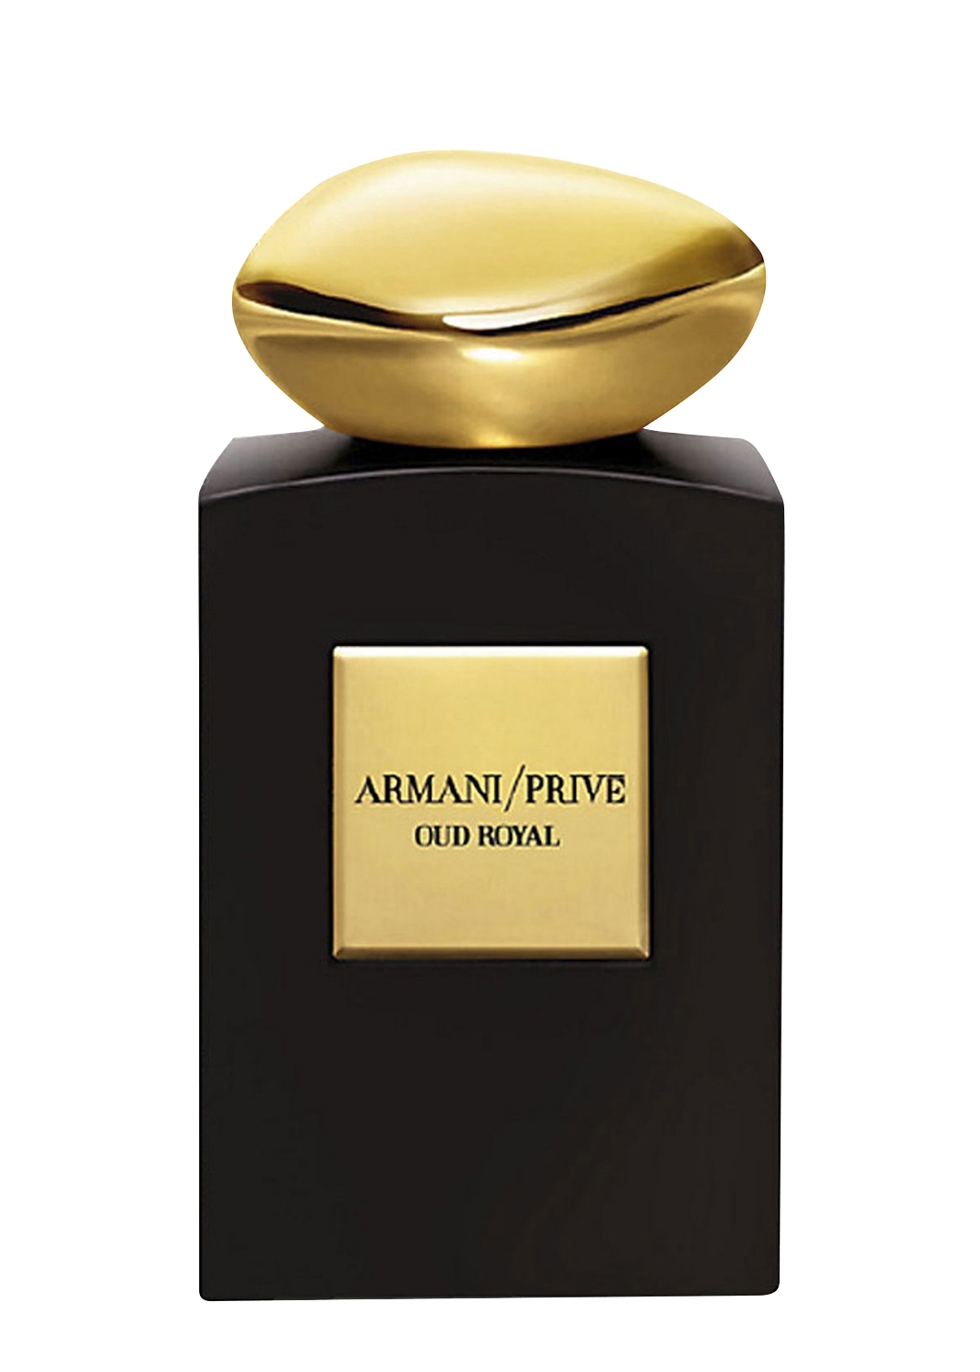 giorgio armani oud royal eau de parfum 100ml